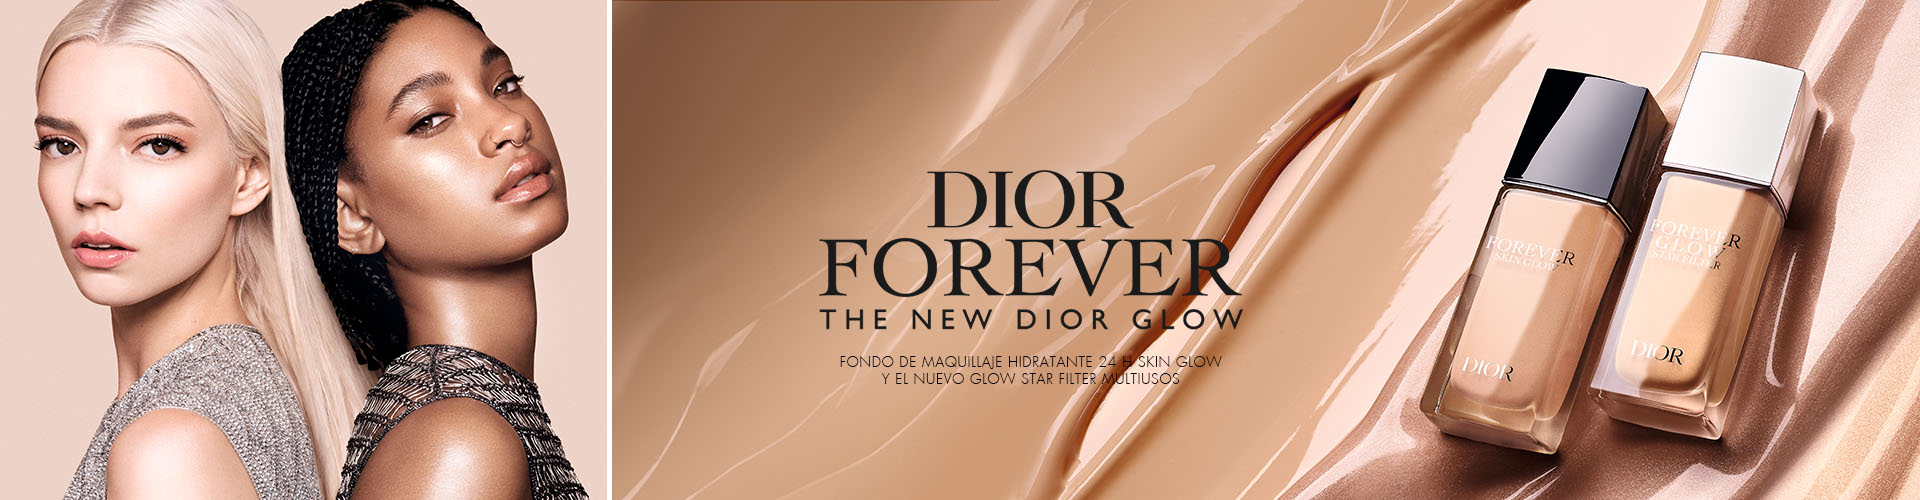 Dior Forever Glow Star Filter | Nuevo Sublimador de Tez | Prieto.es